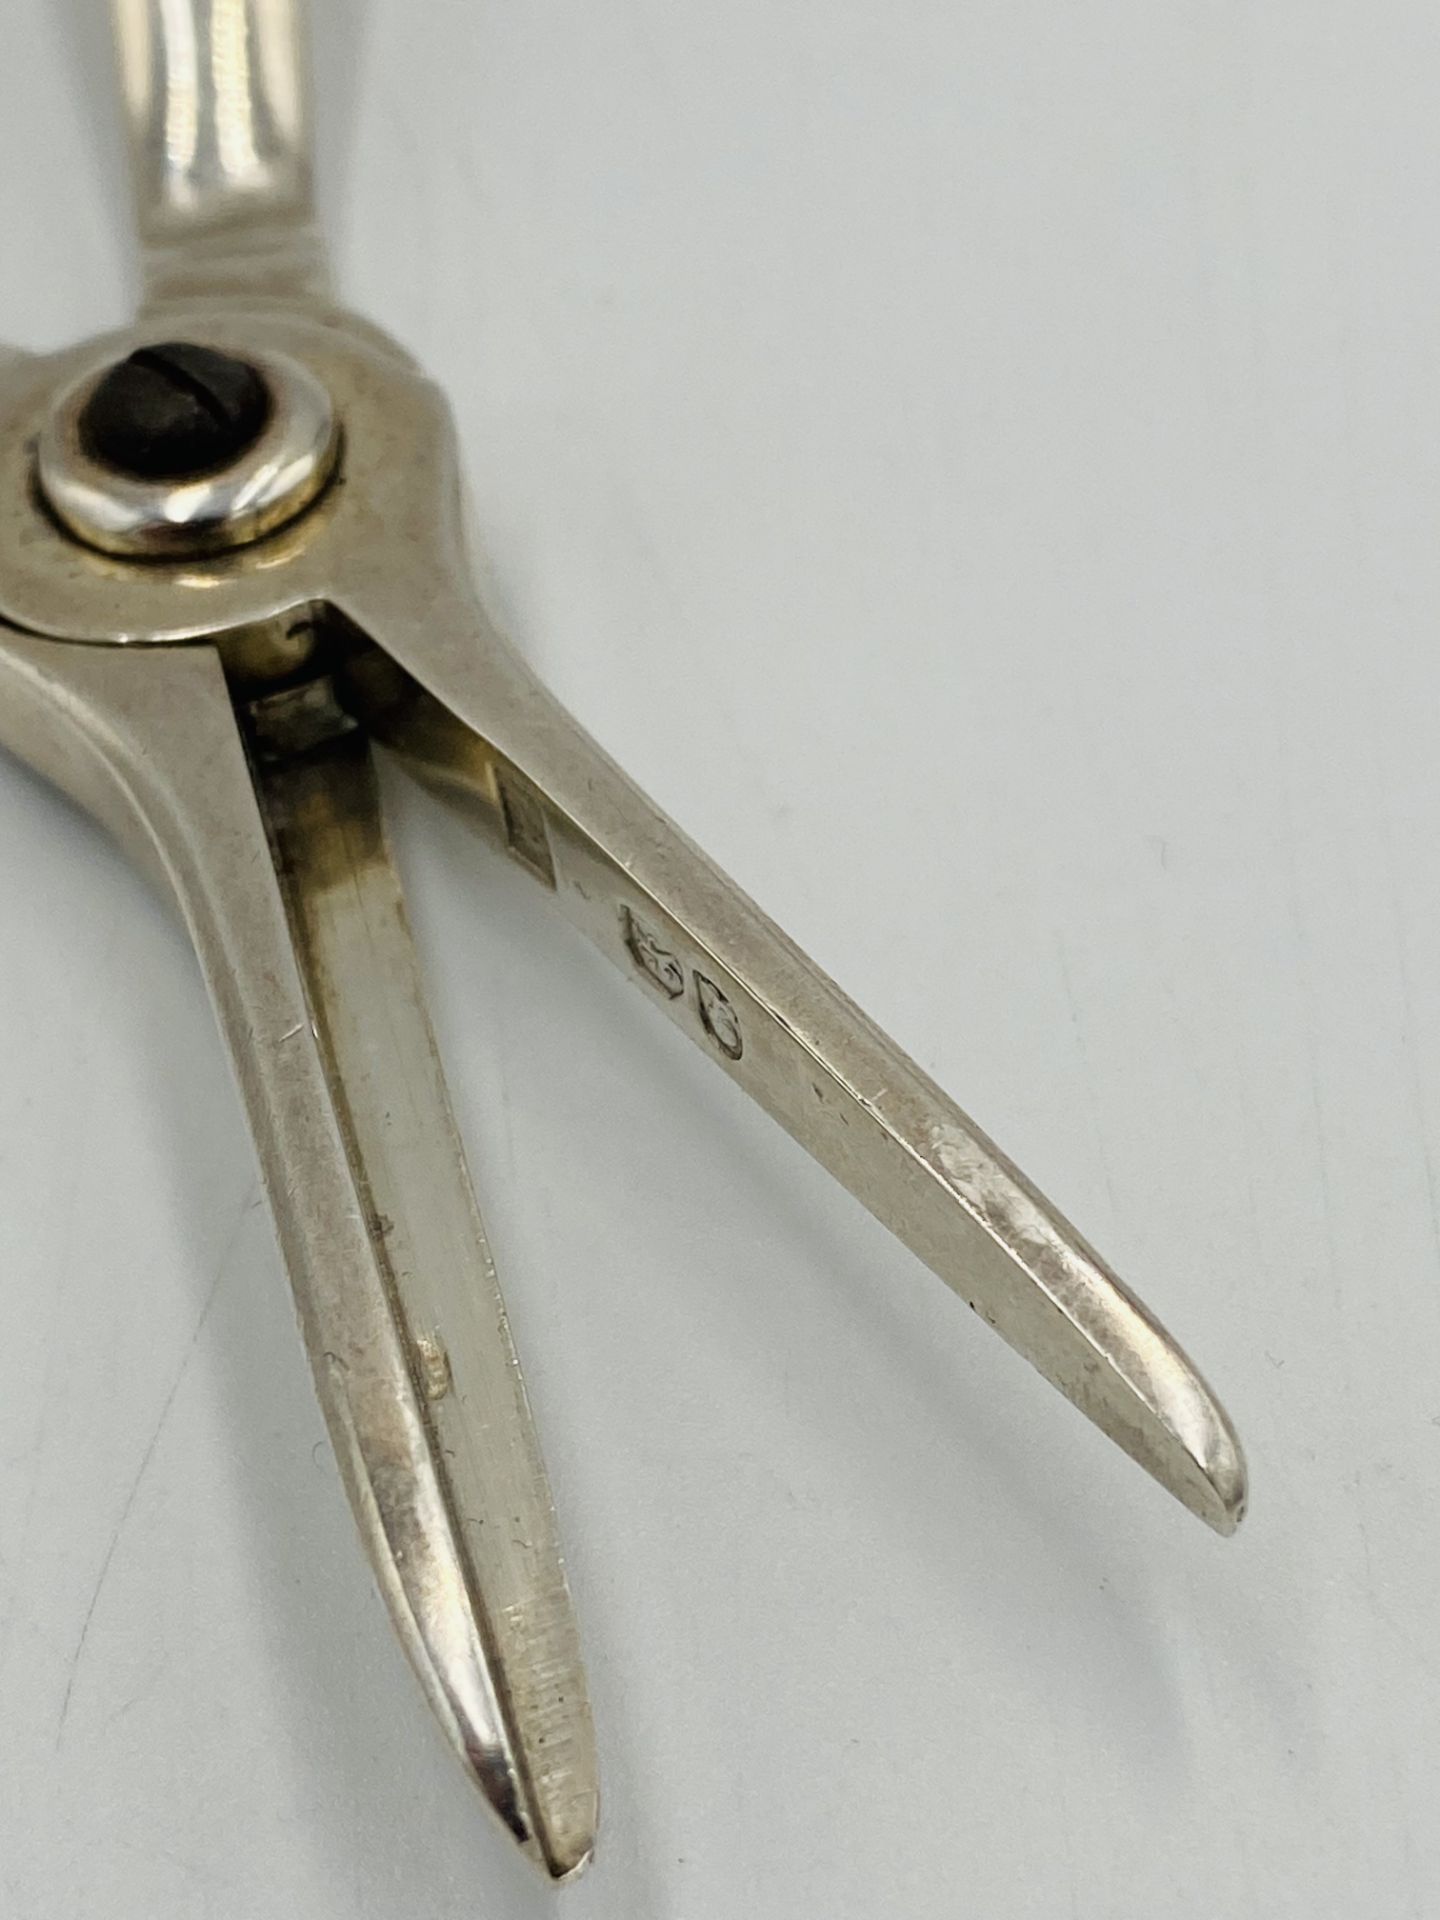 Pair of silver grape scissors - Image 3 of 3